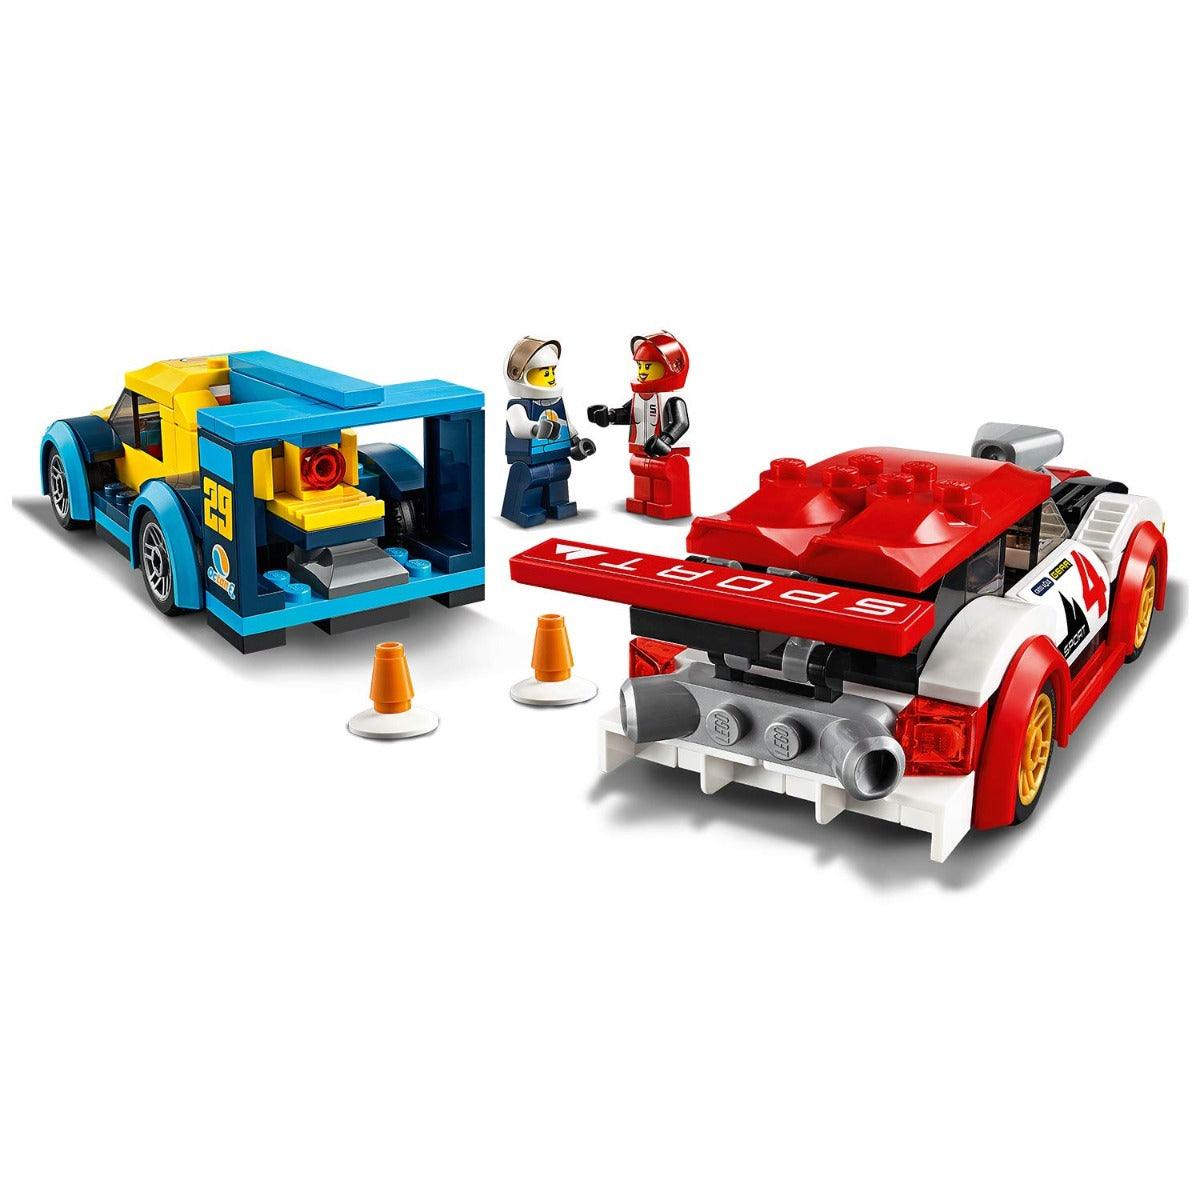 LEGO City Nitro Wheels Racing Cars Building Set